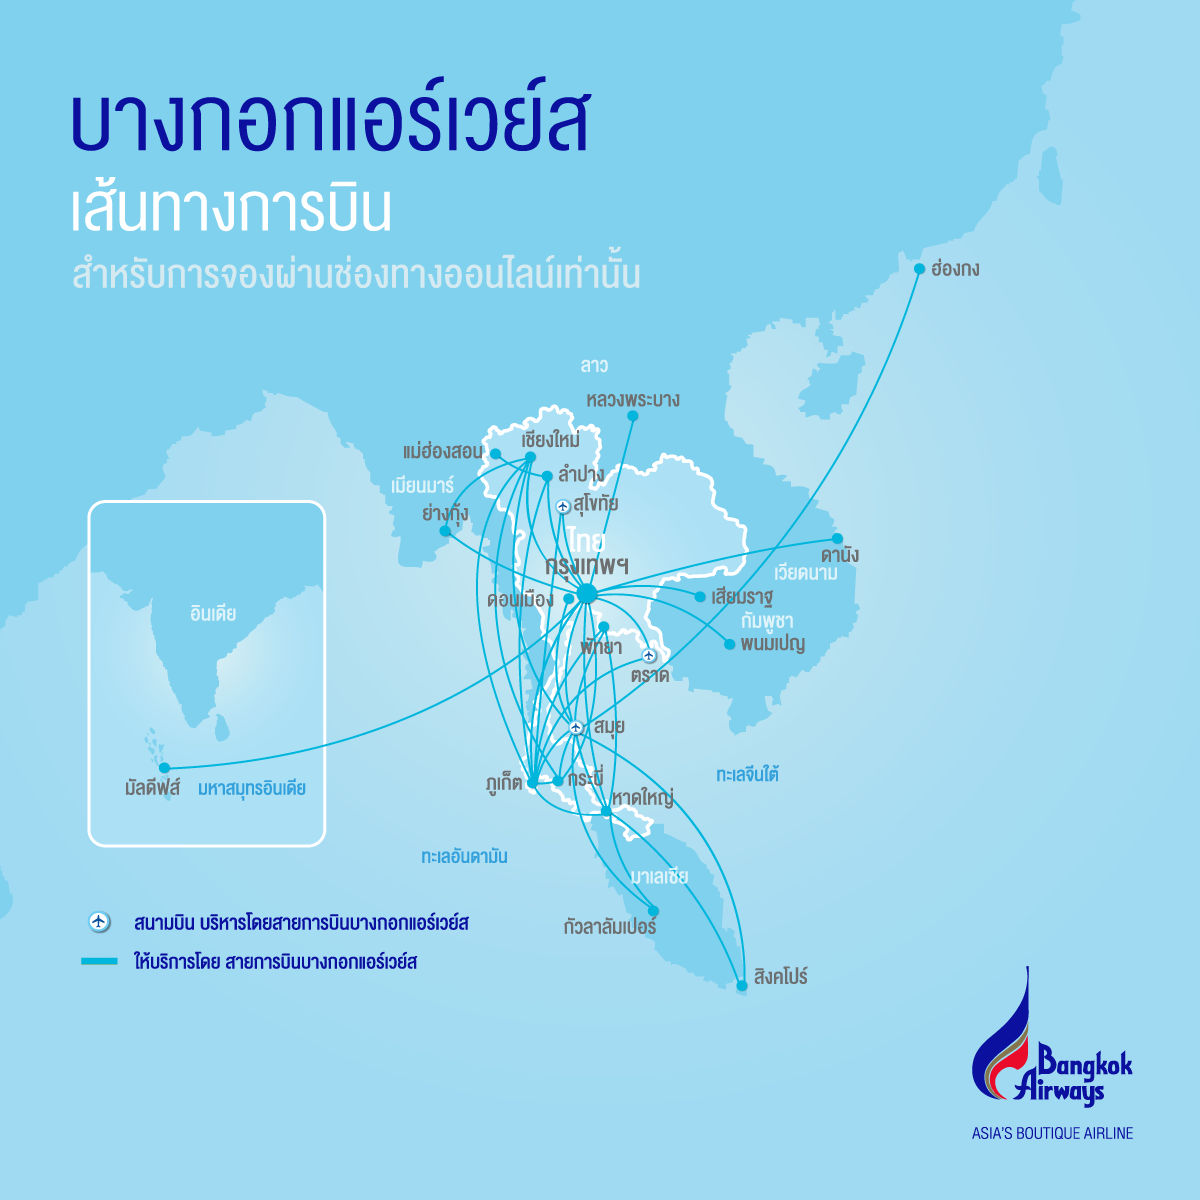 Route Map Bangkok Airways